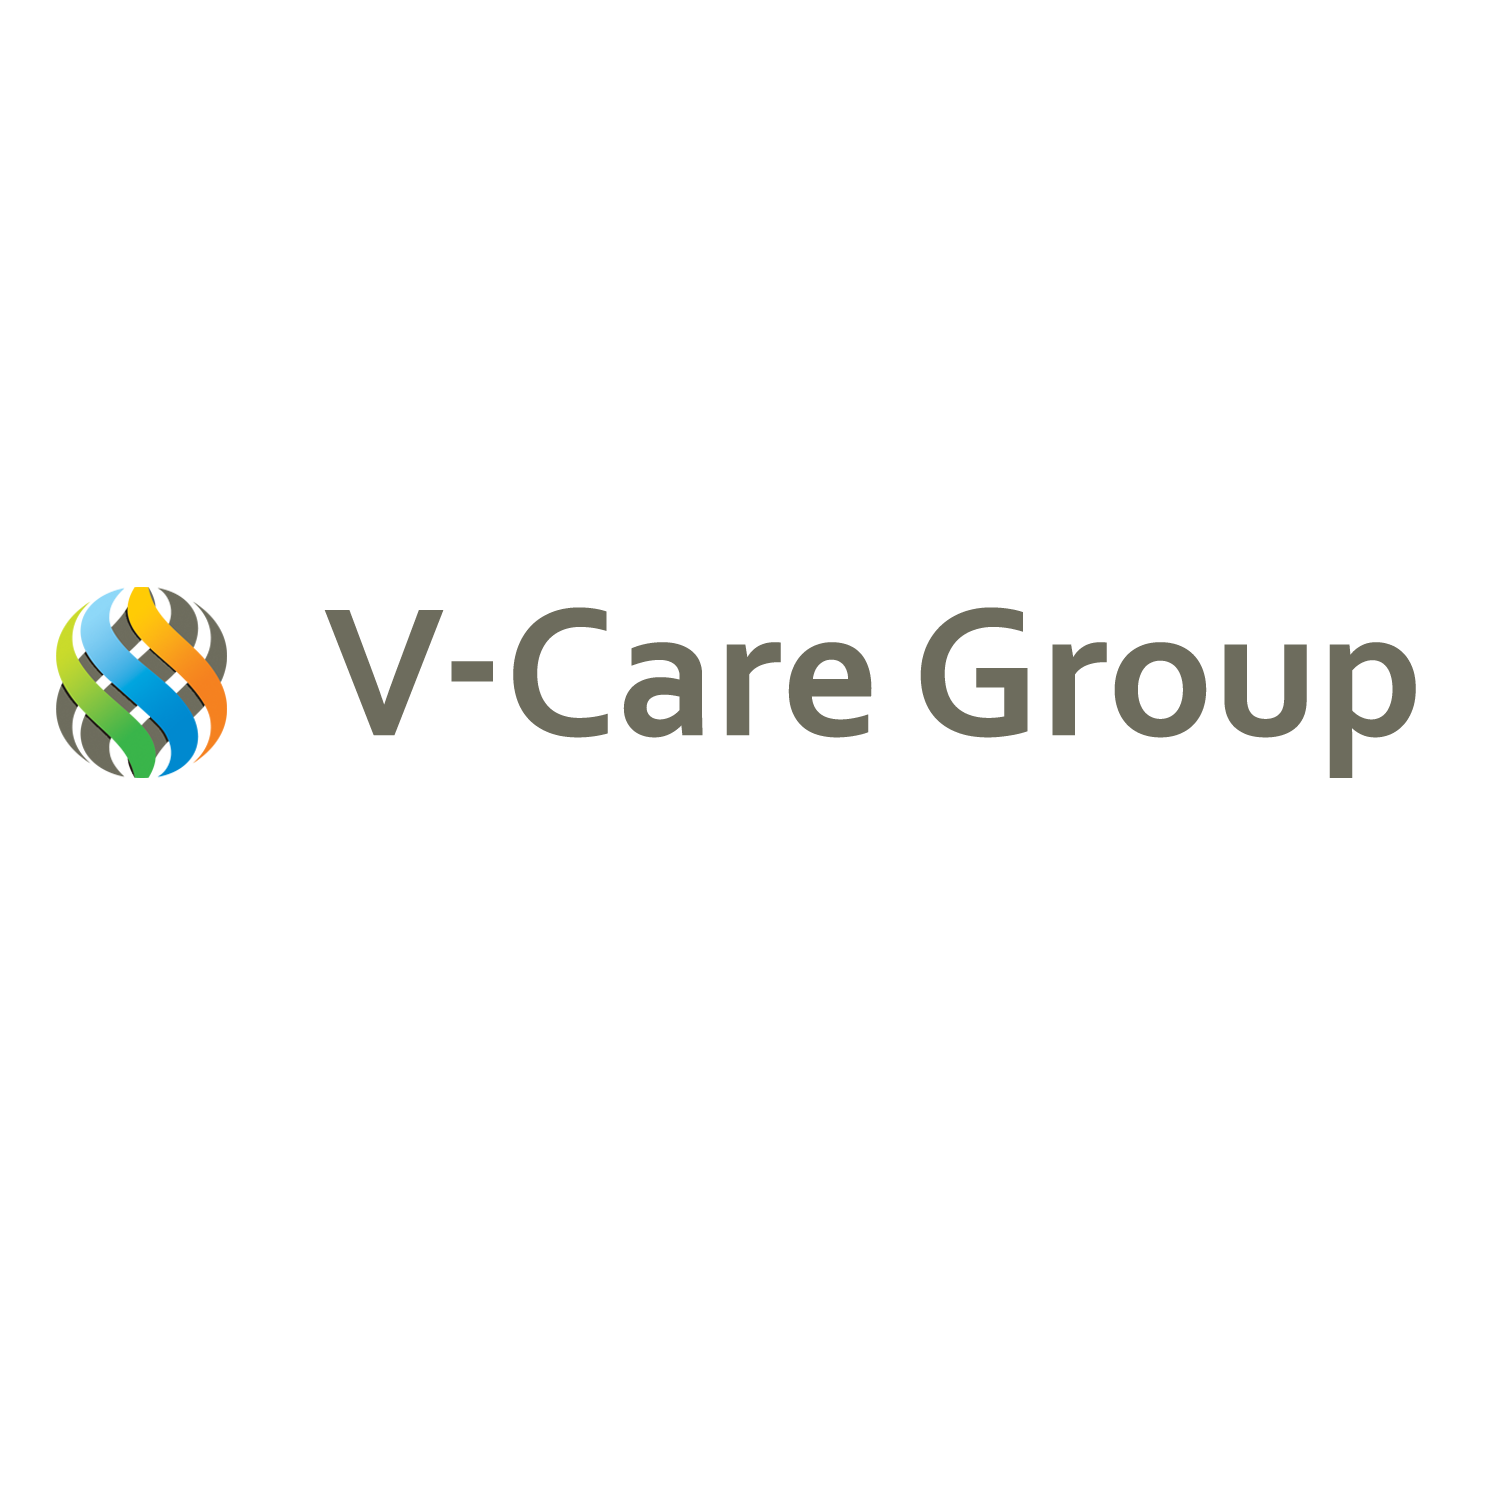 Vcare Group